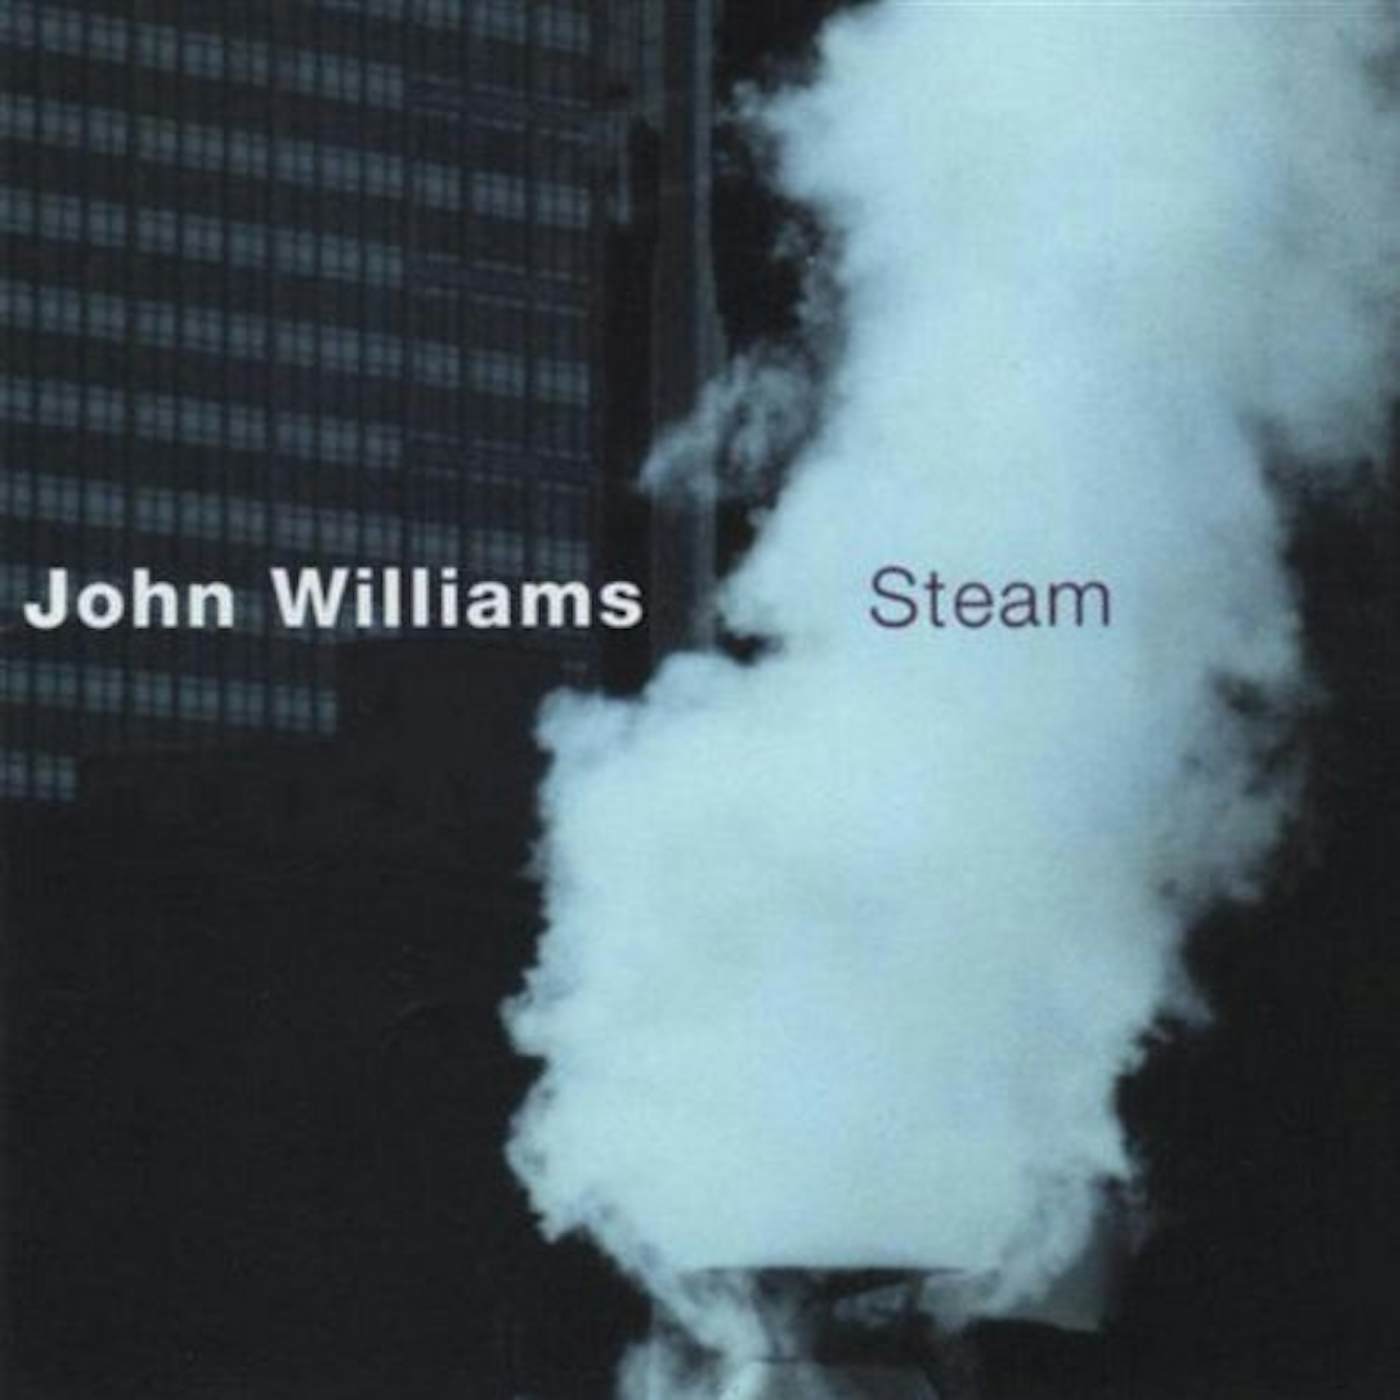 John Williams STEAM CD